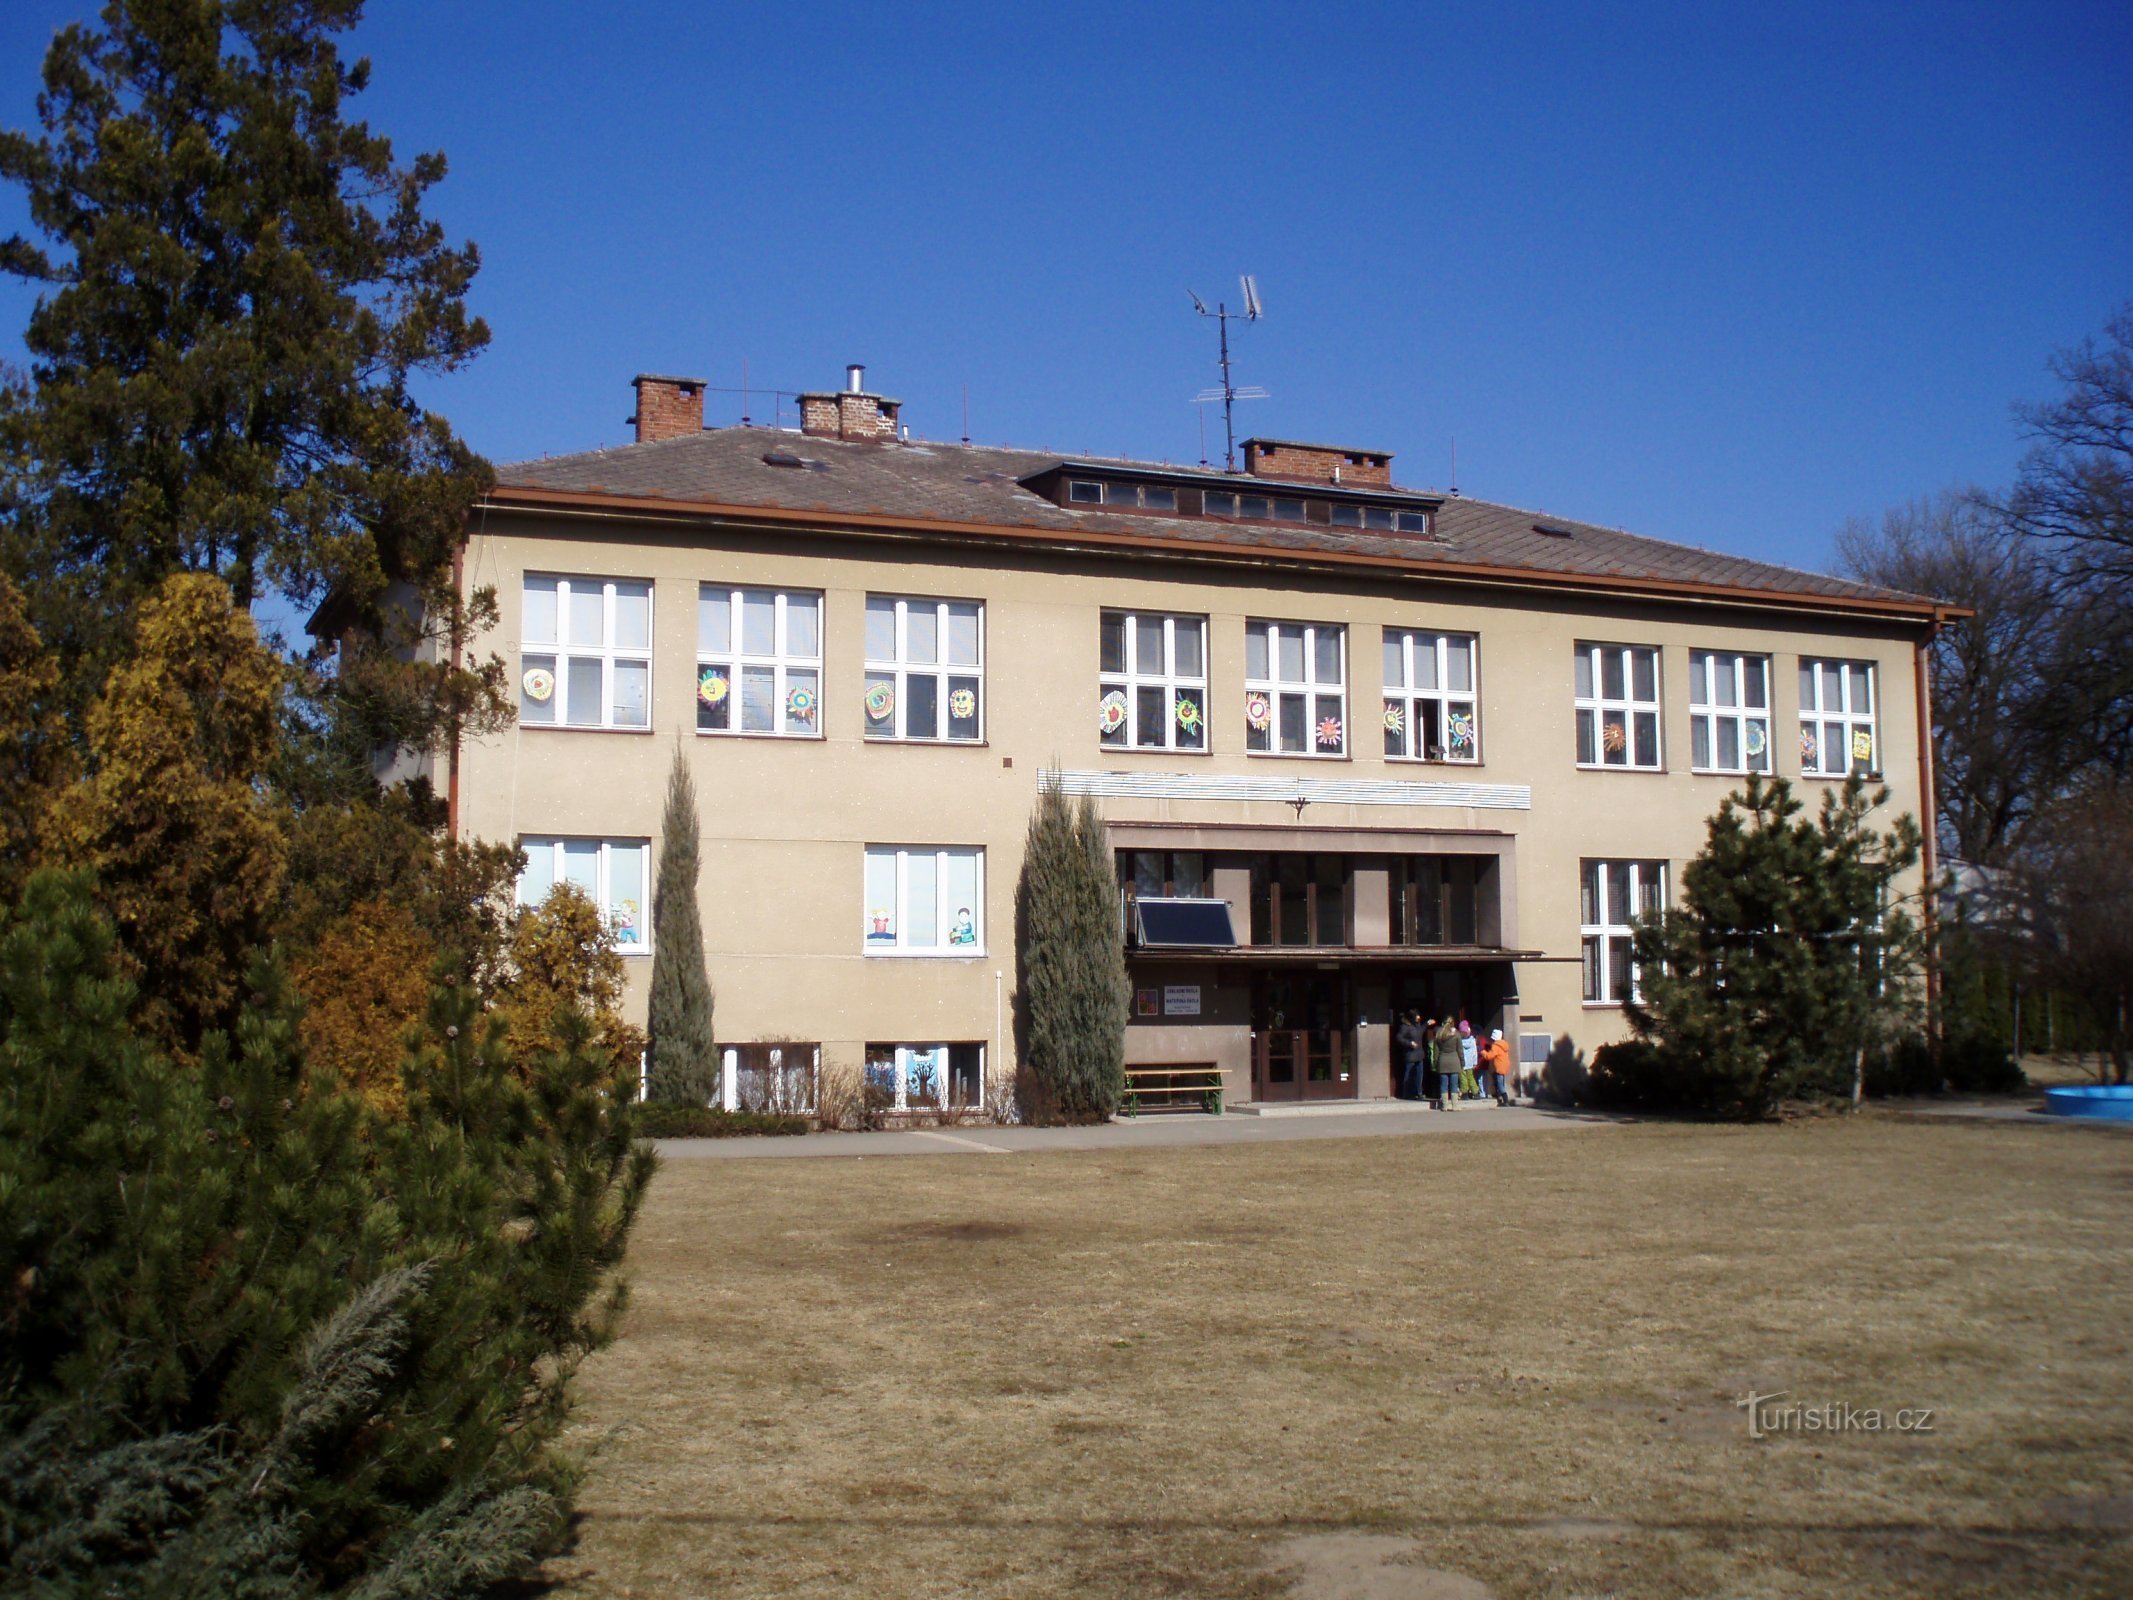 Škola u Malšov Lhoti (8.3.2011. ožujka XNUMX.)